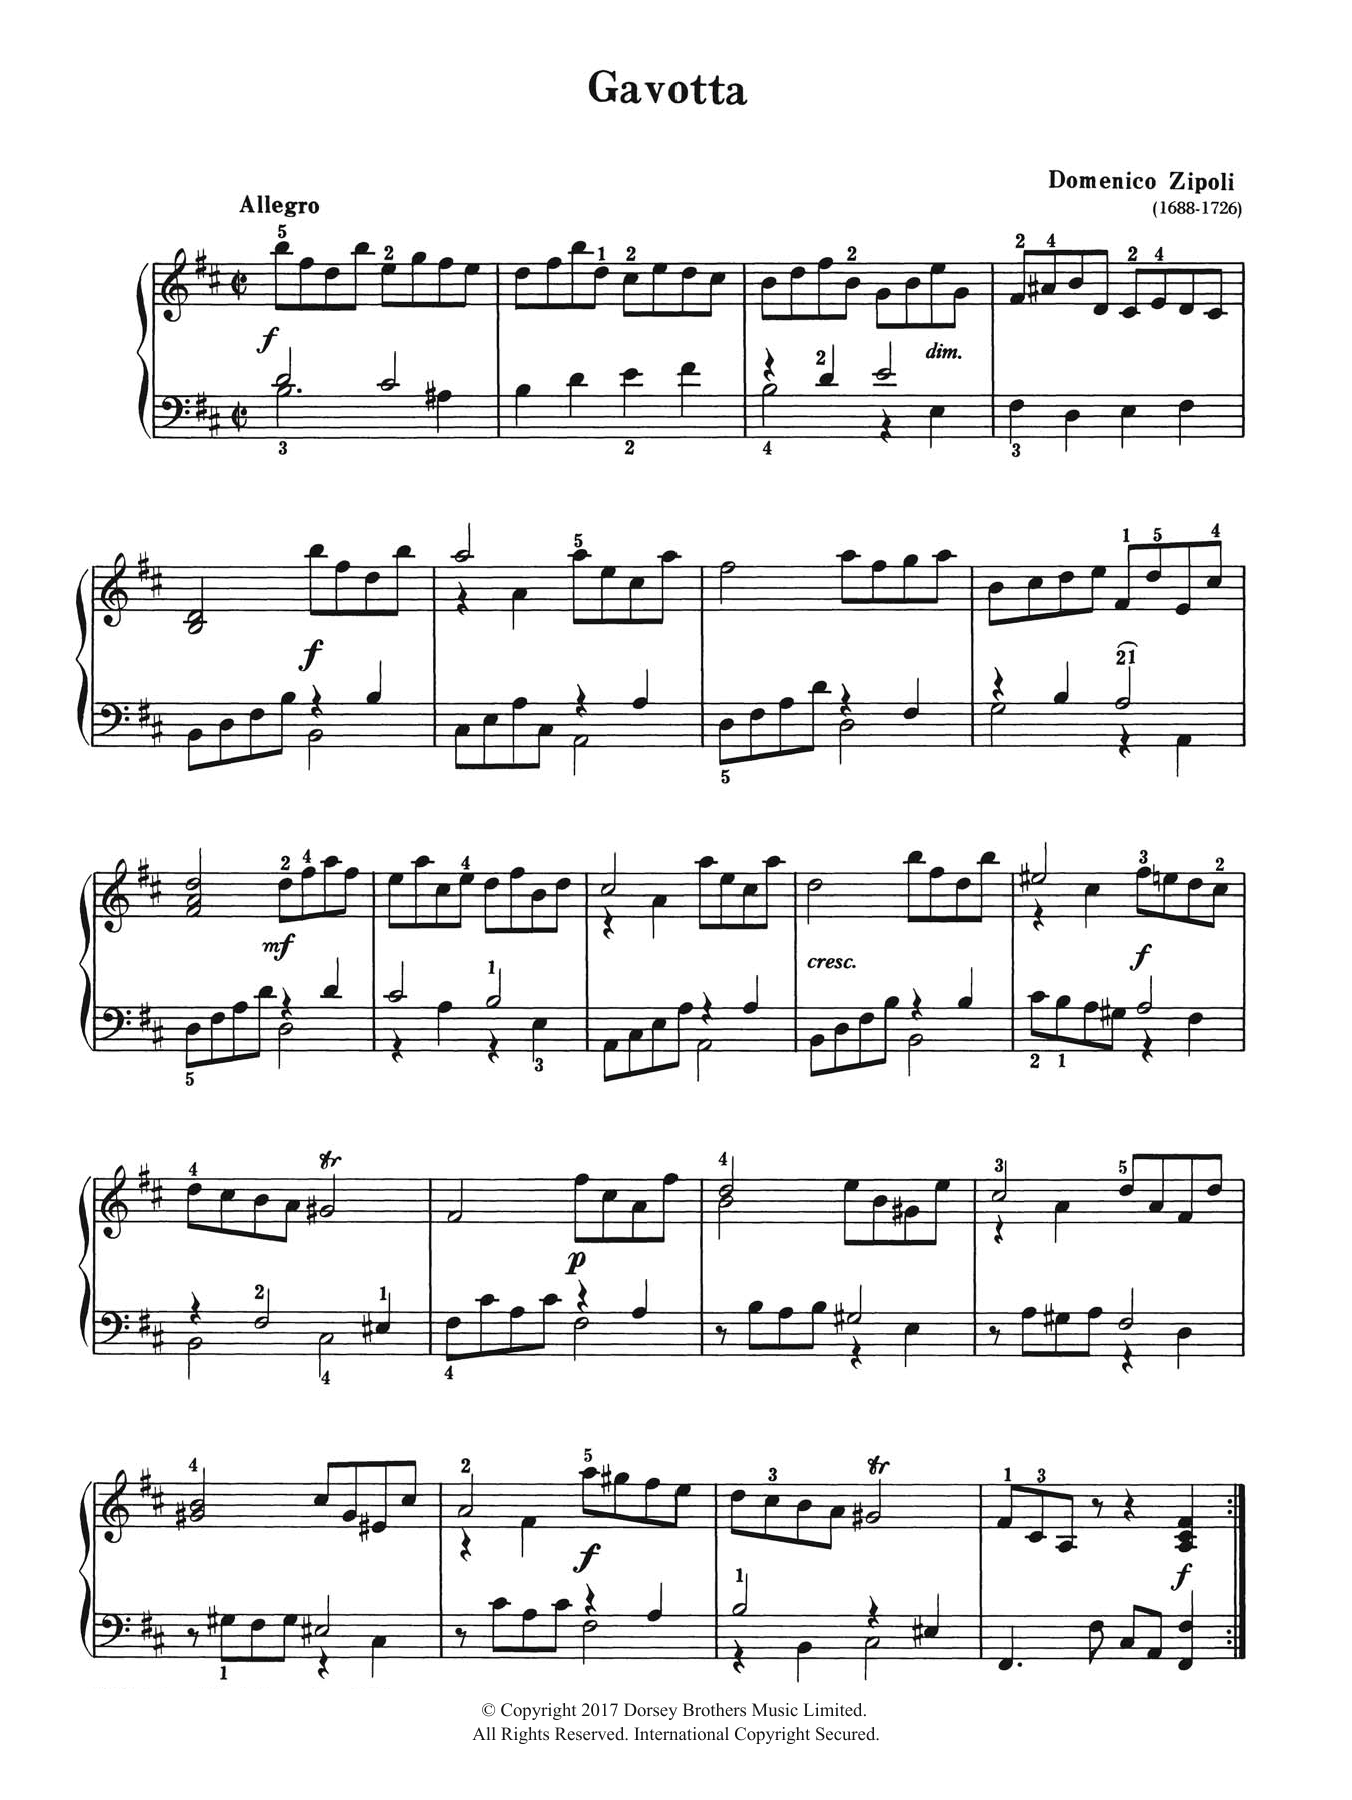 Domenico Zipoli Gavotta Sheet Music Notes & Chords for Piano - Download or Print PDF